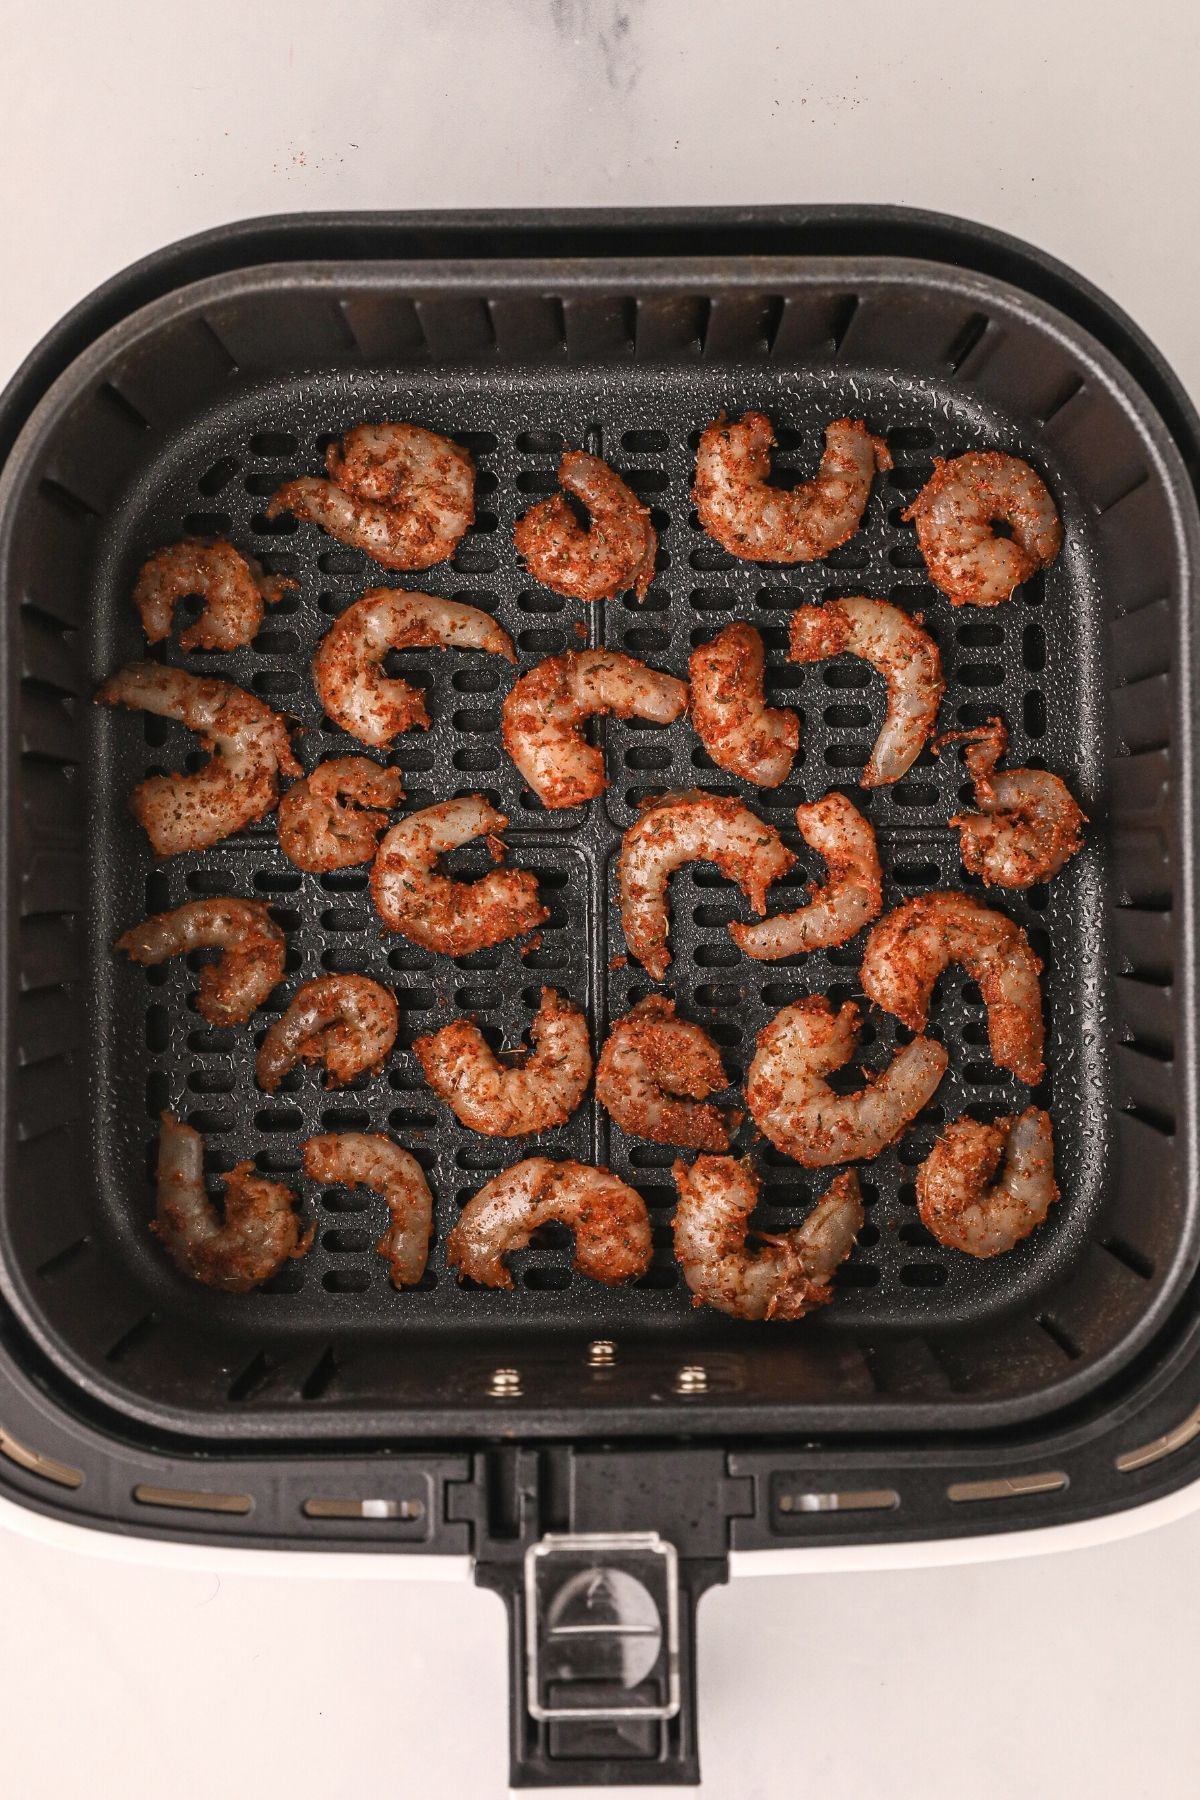 Seasoned shrimp in the air fryer basket before being cooked in the air fryer